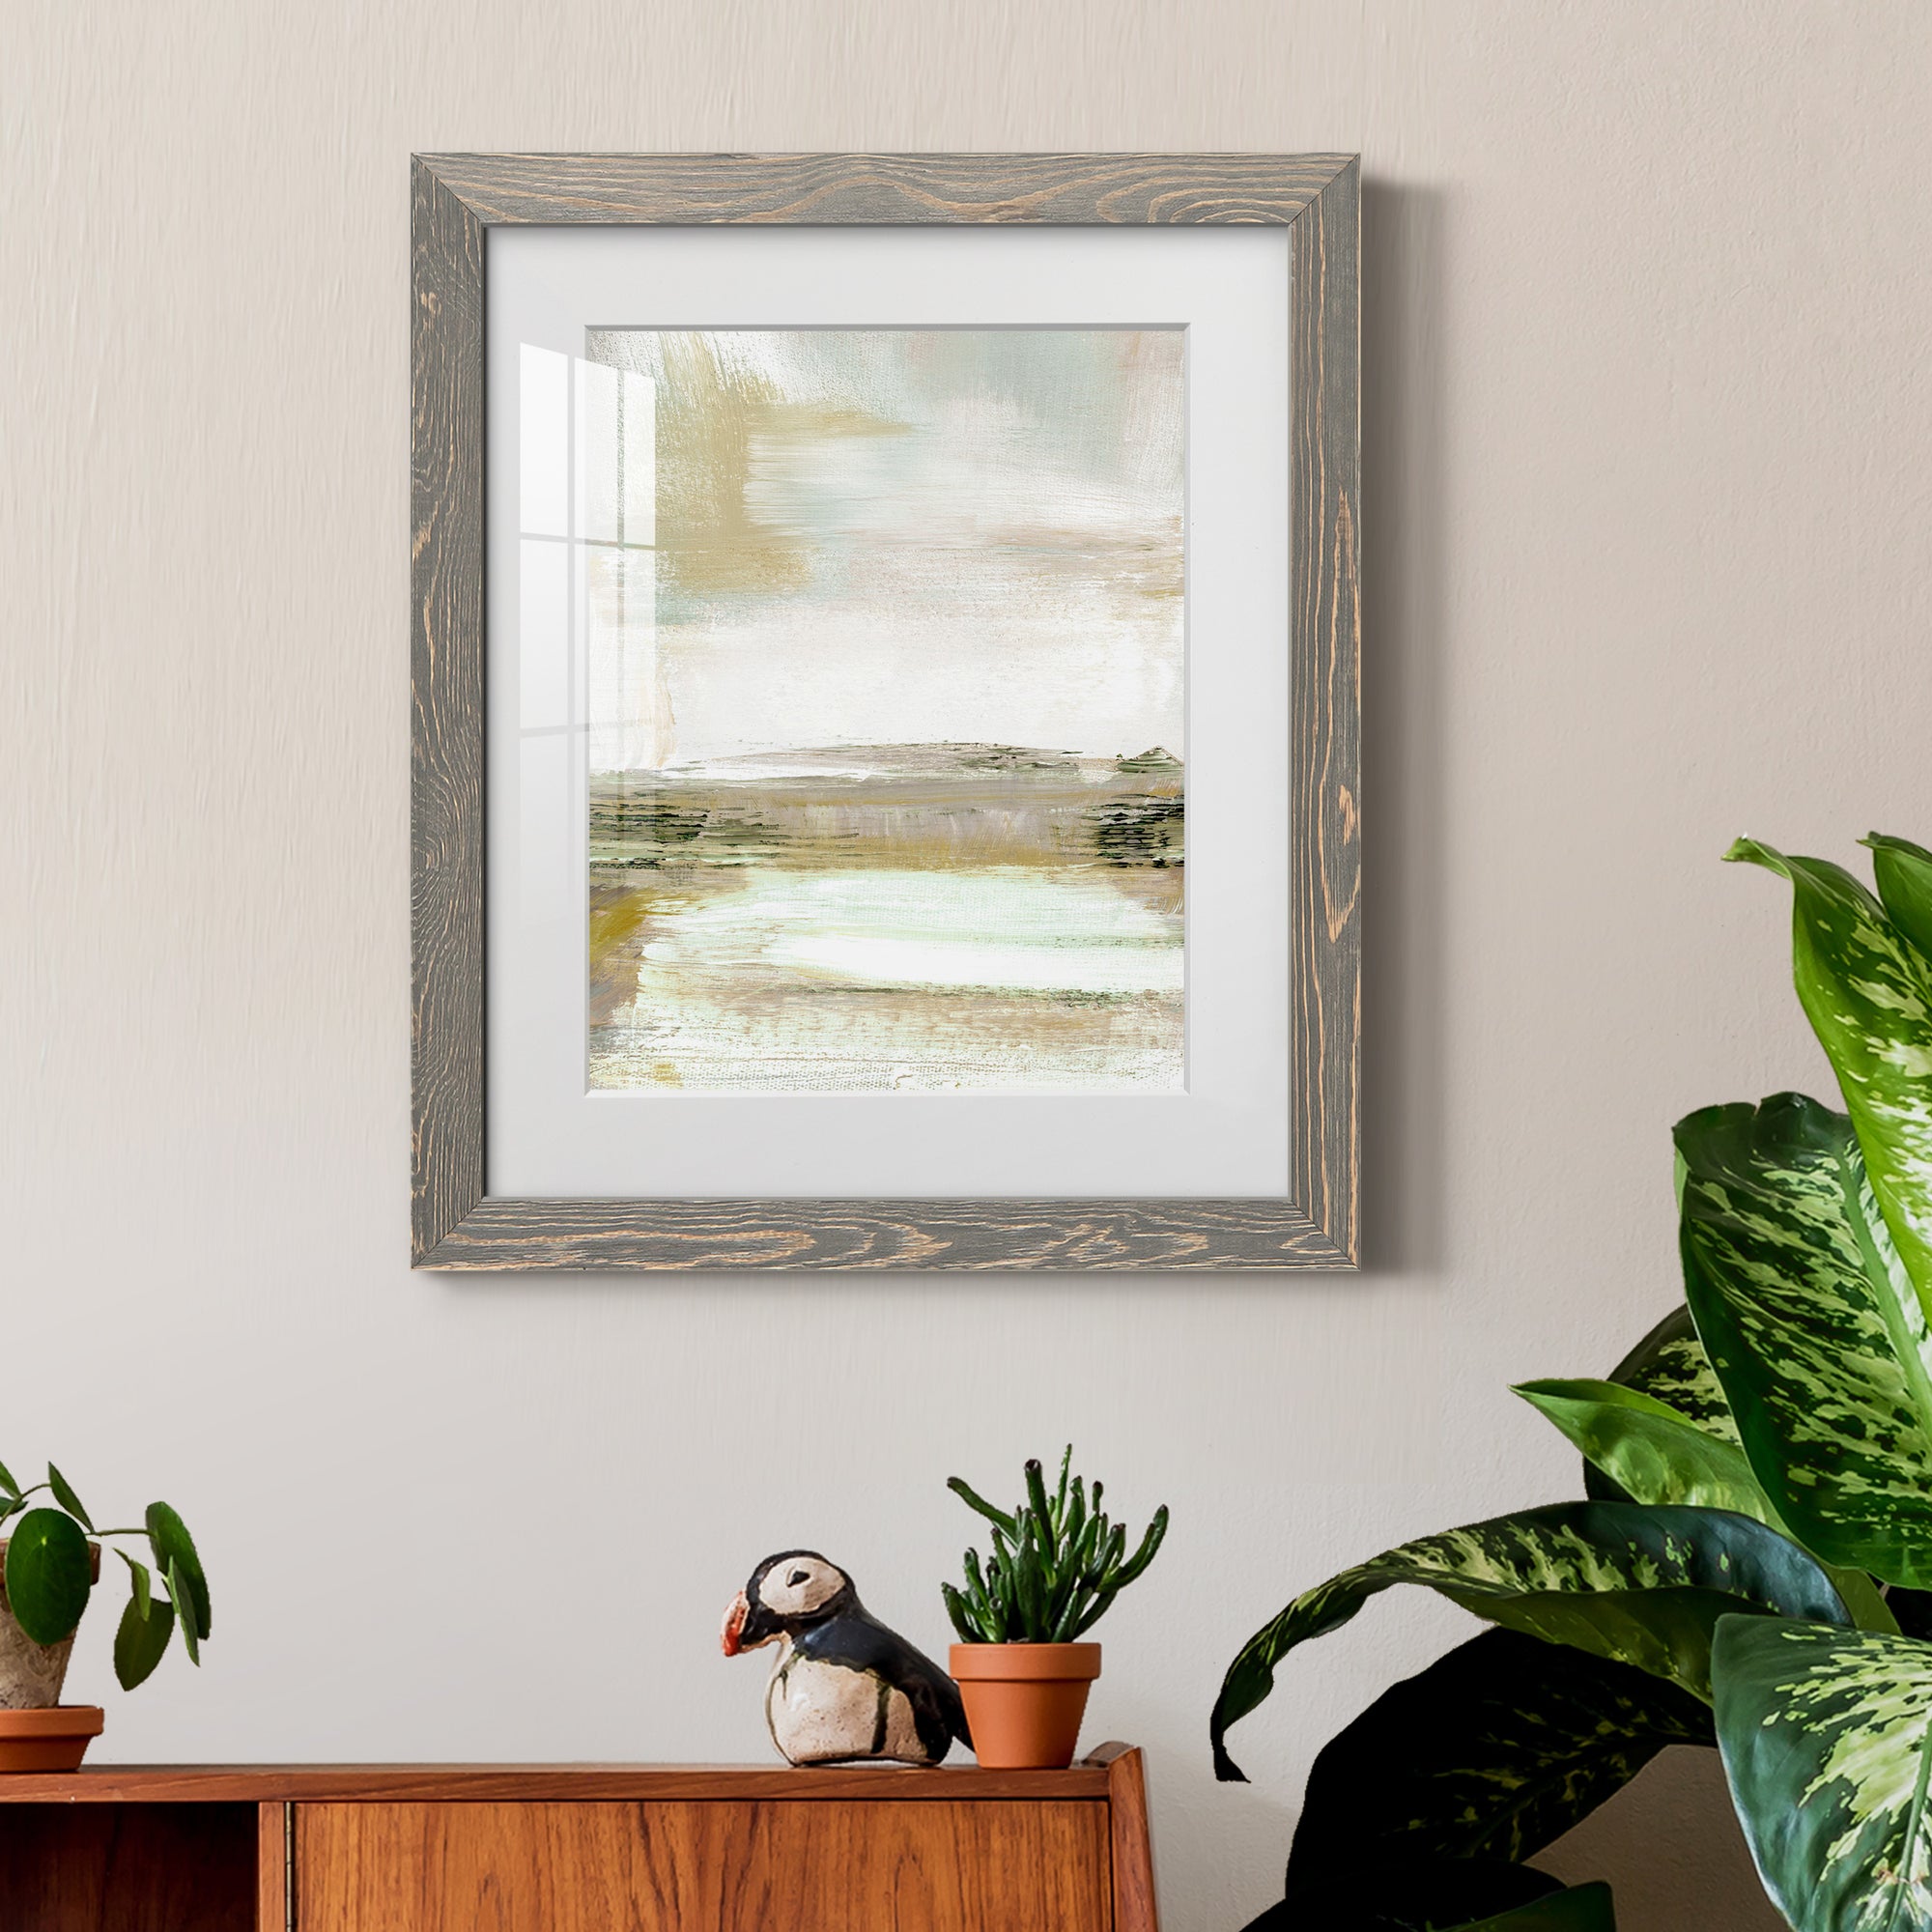 Summer Haze I - Premium Framed Print - Distressed Barnwood Frame - Ready to Hang